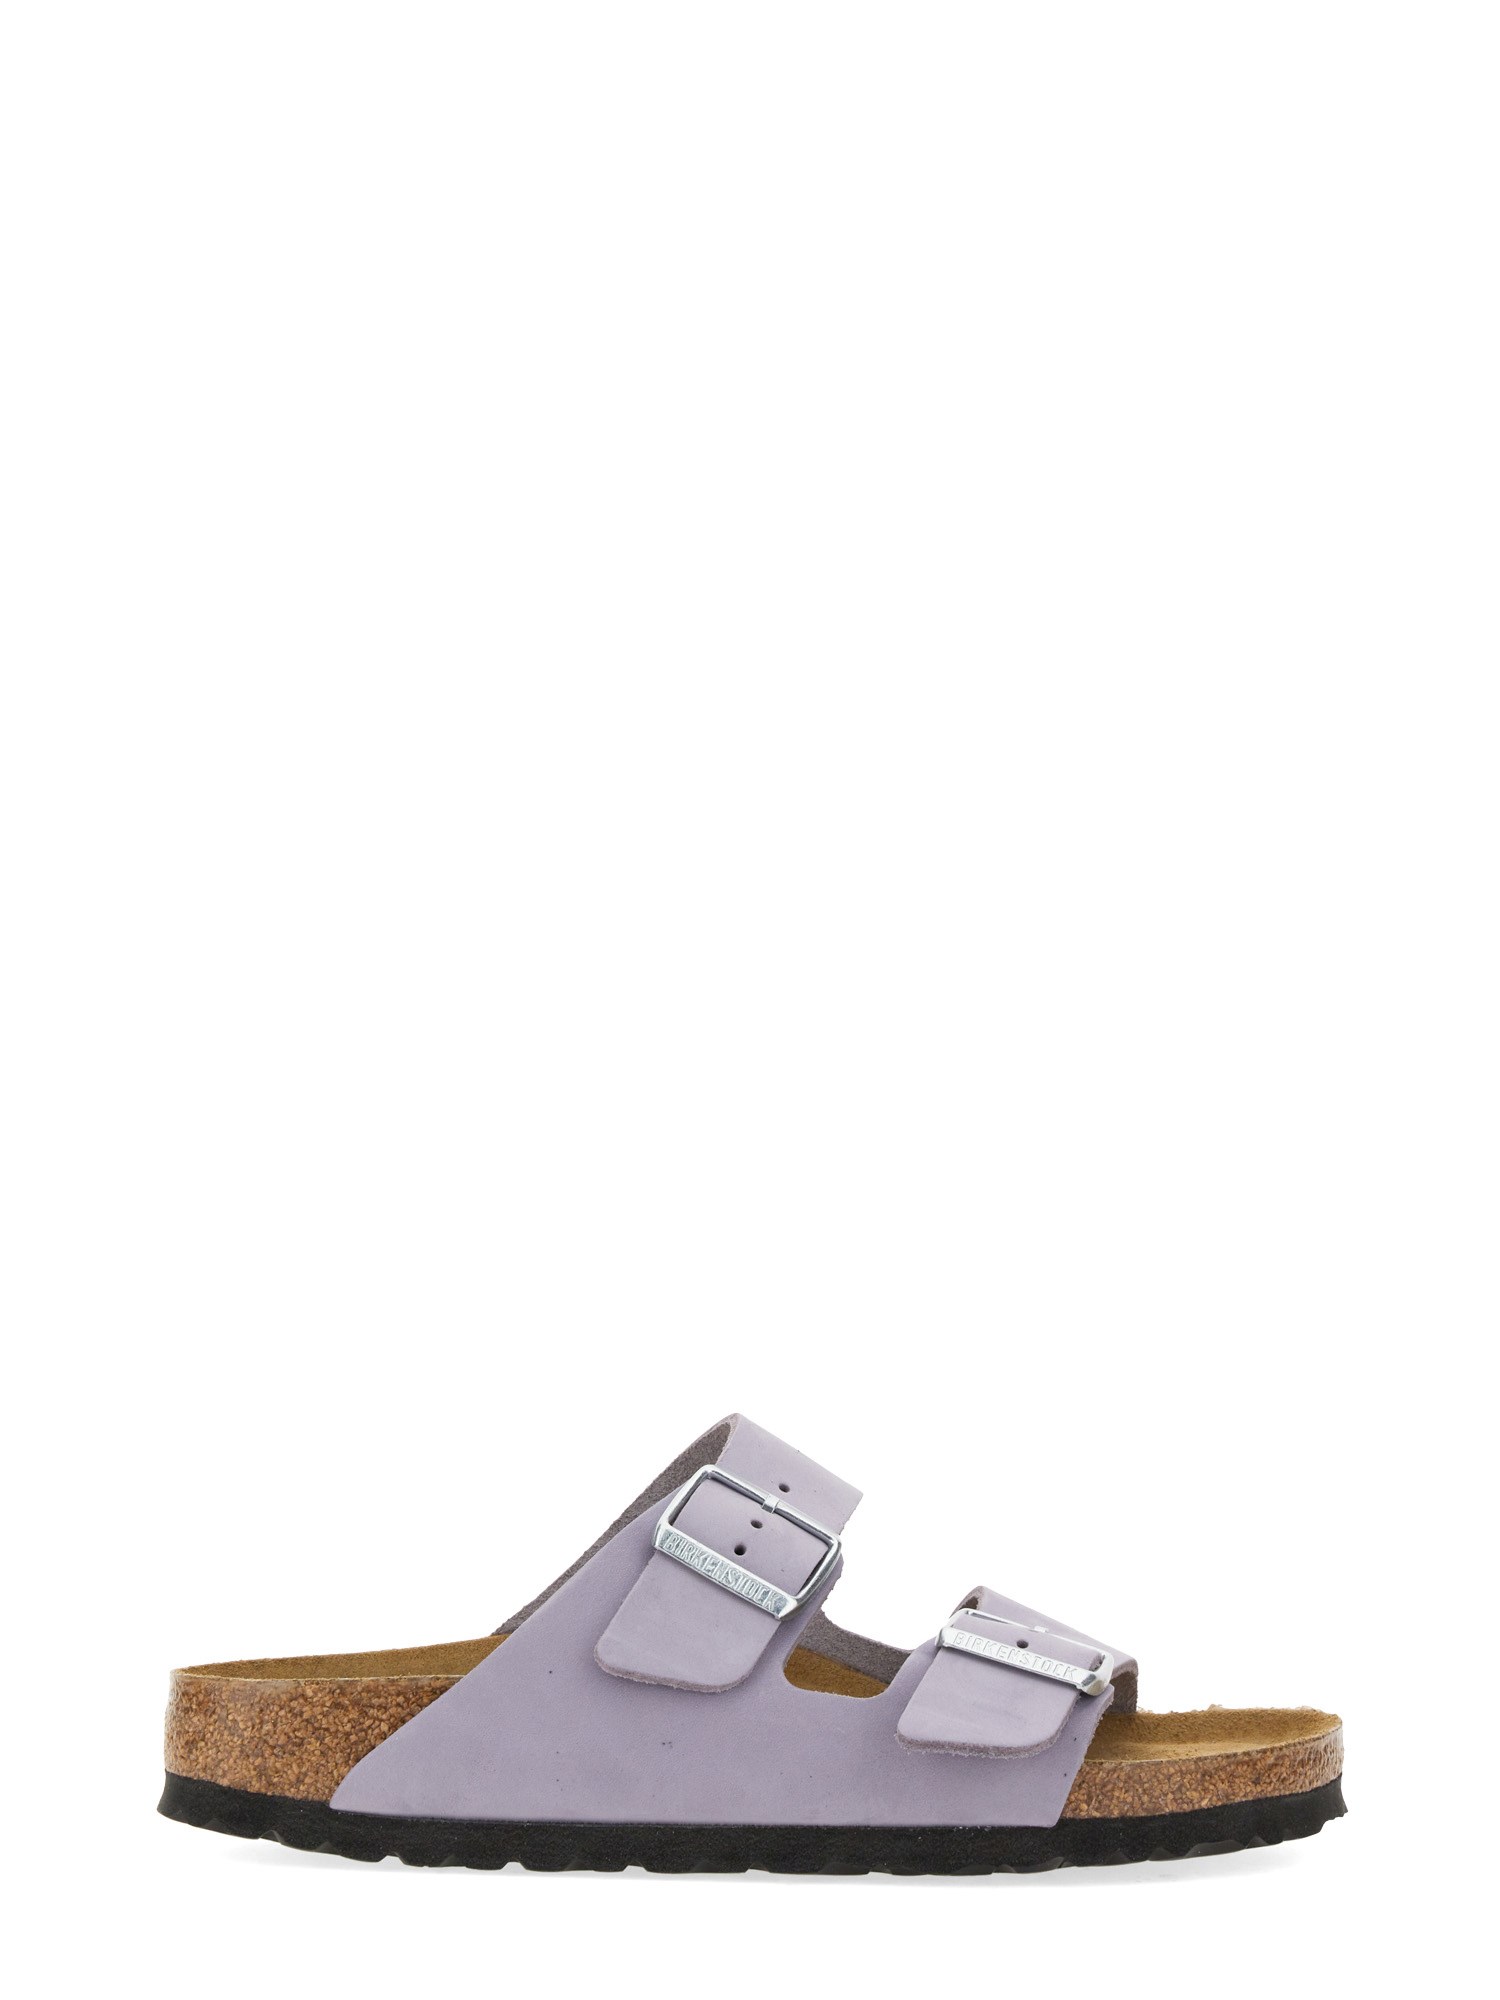 Birkenstock Arizona Leather Sandals In Purple